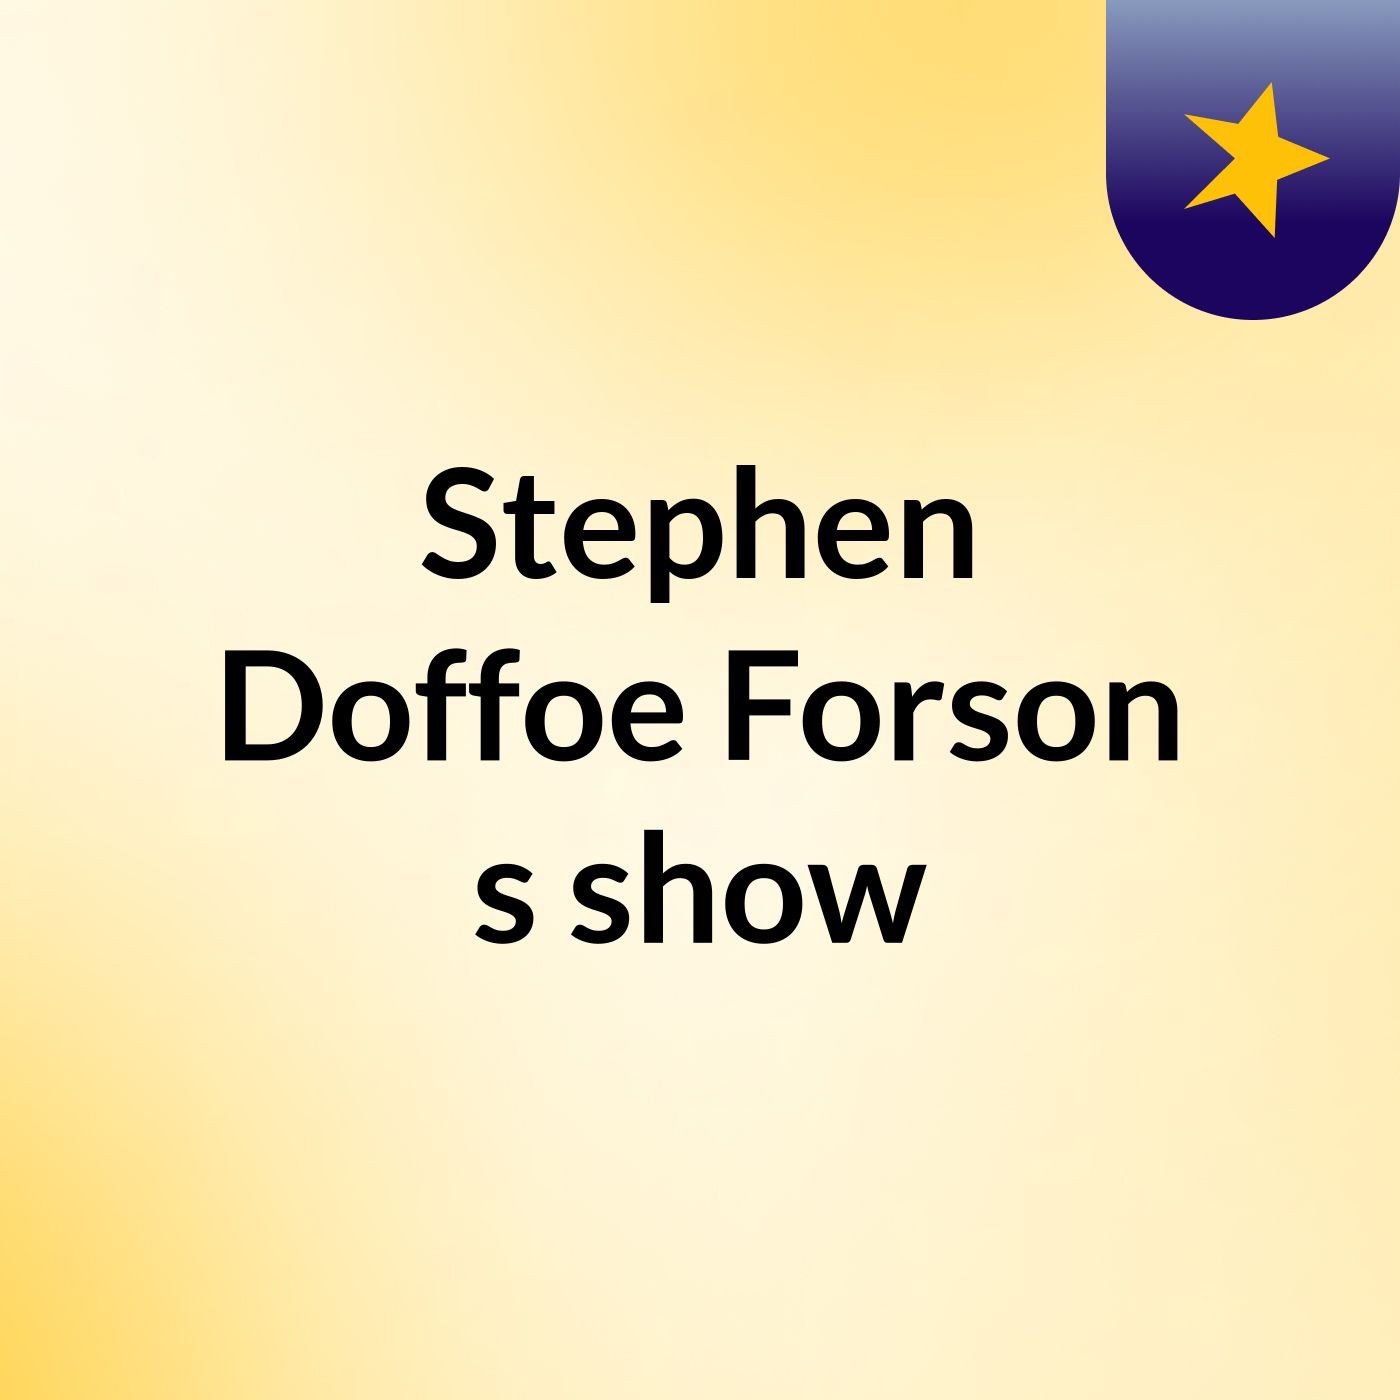 Stephen Doffoe Forson's show